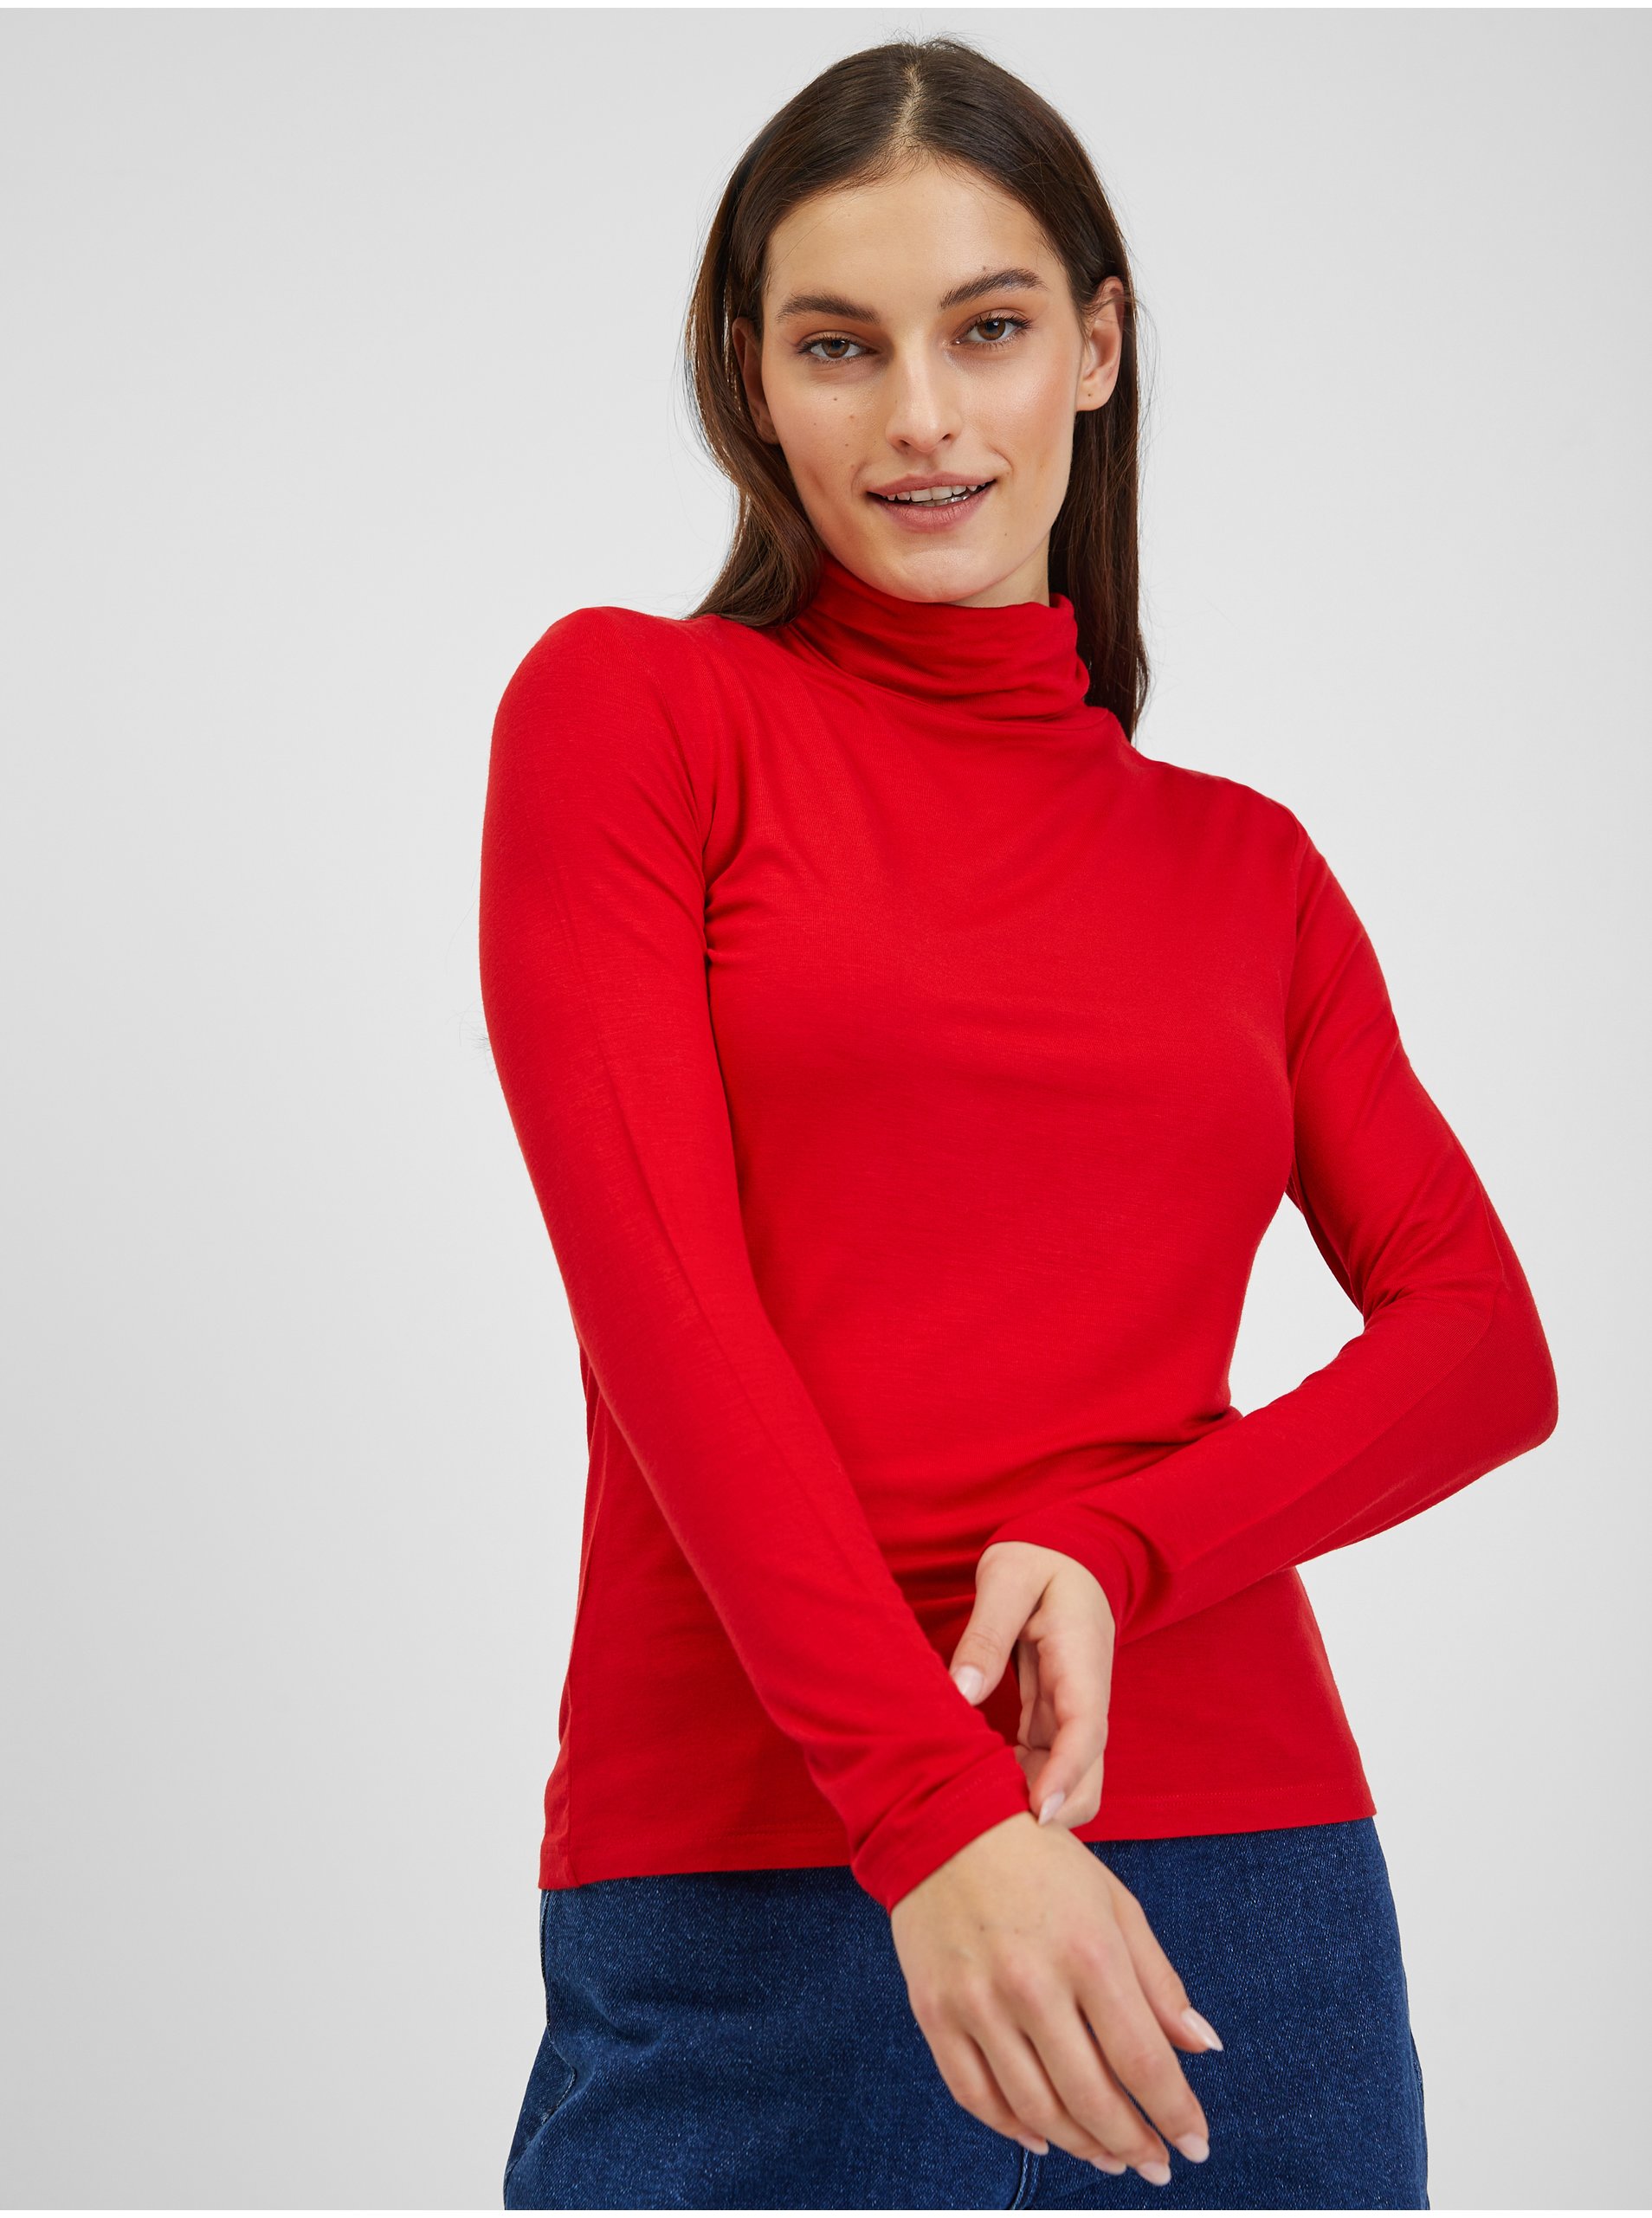 Orsay Red Womens T-Shirt - Women